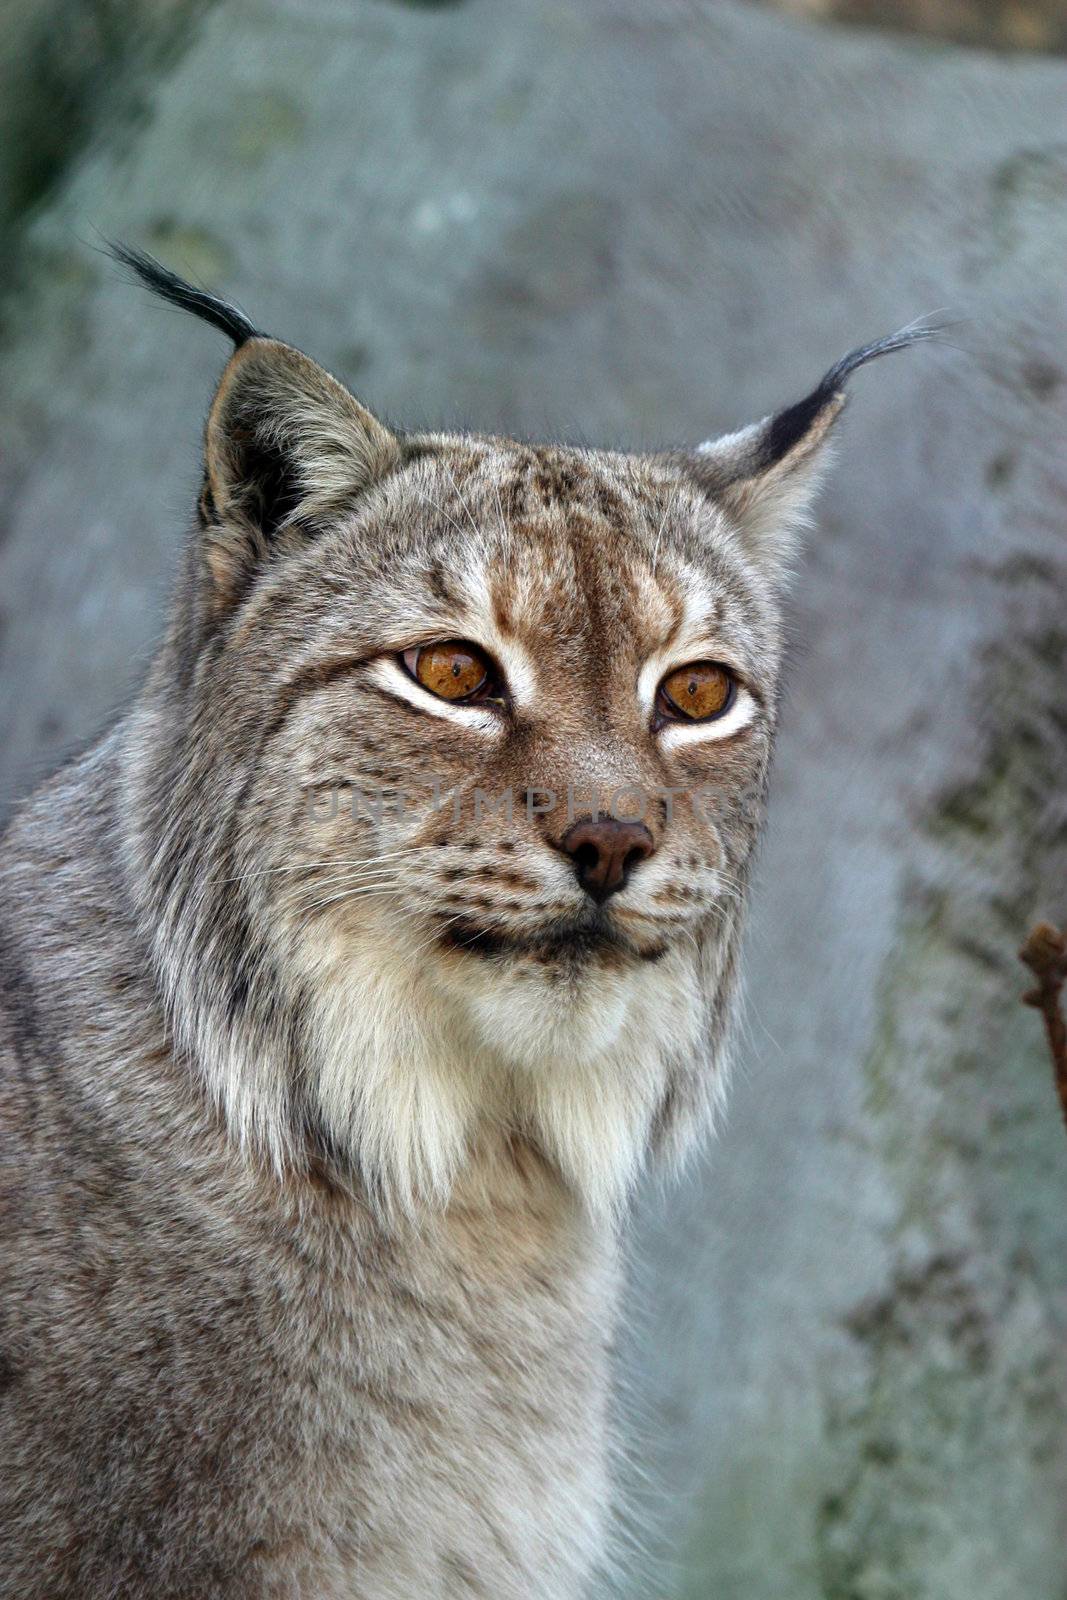 A lynx looking